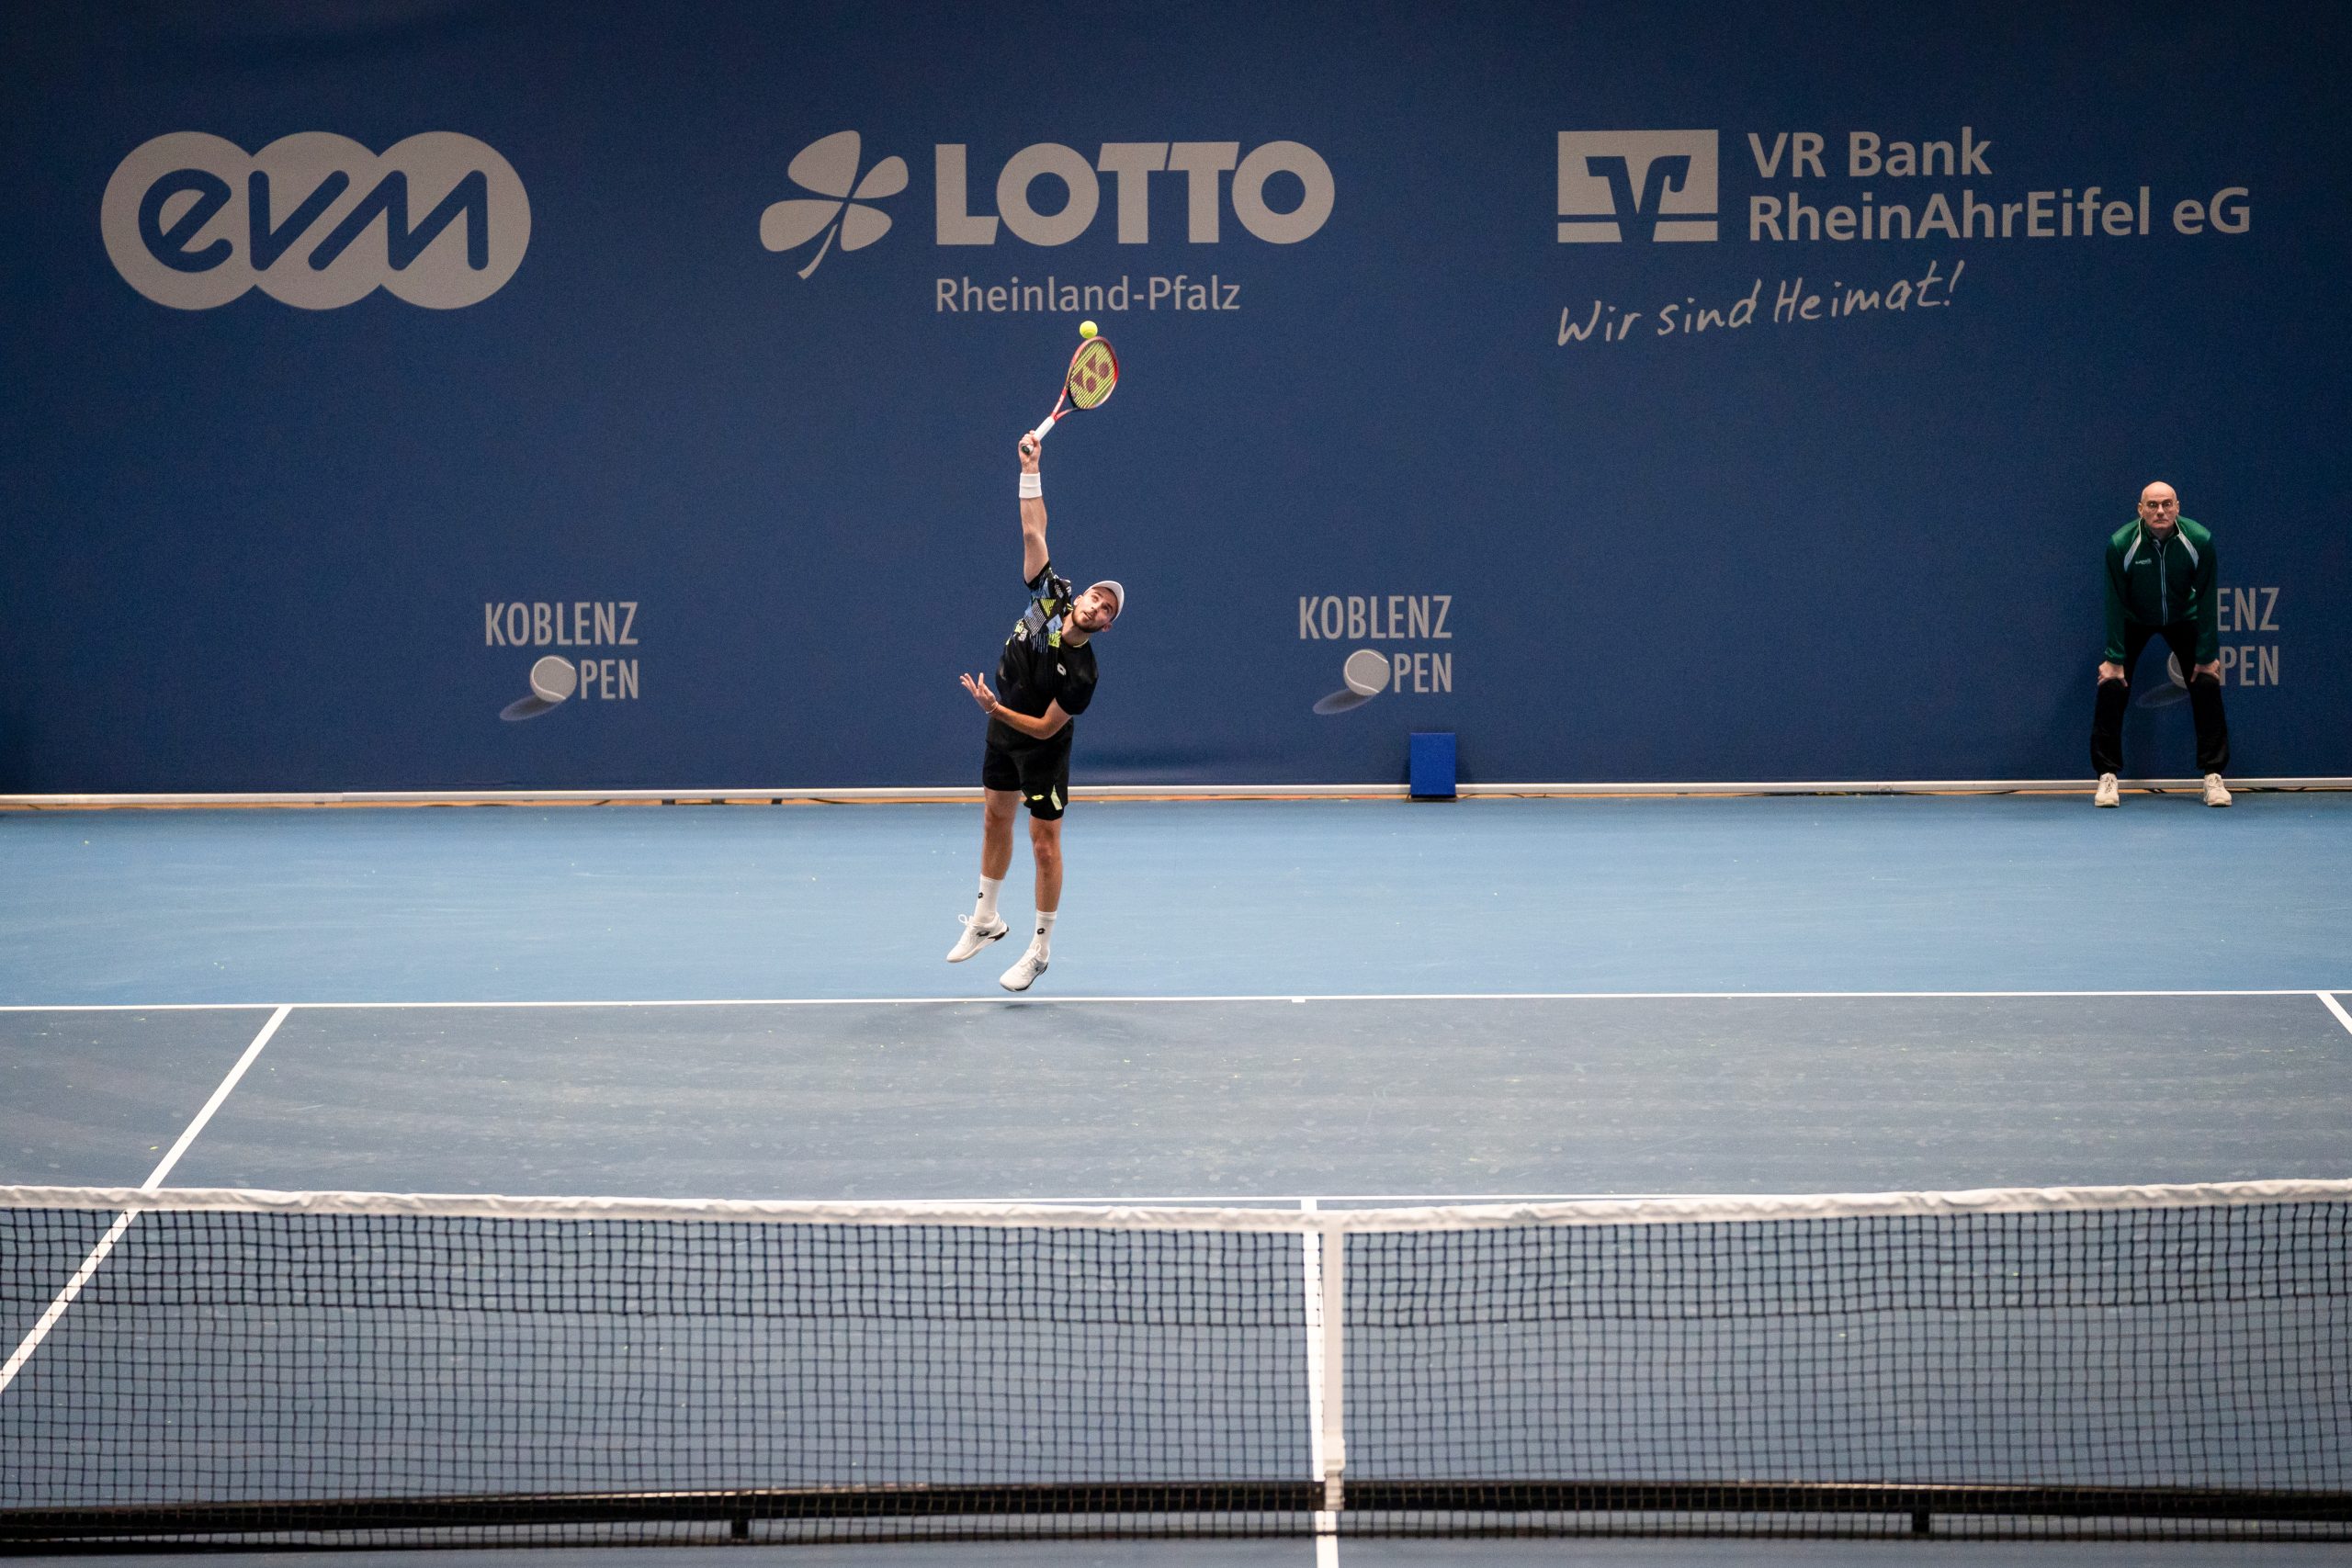 Tennis-Fieber in Koblenz!